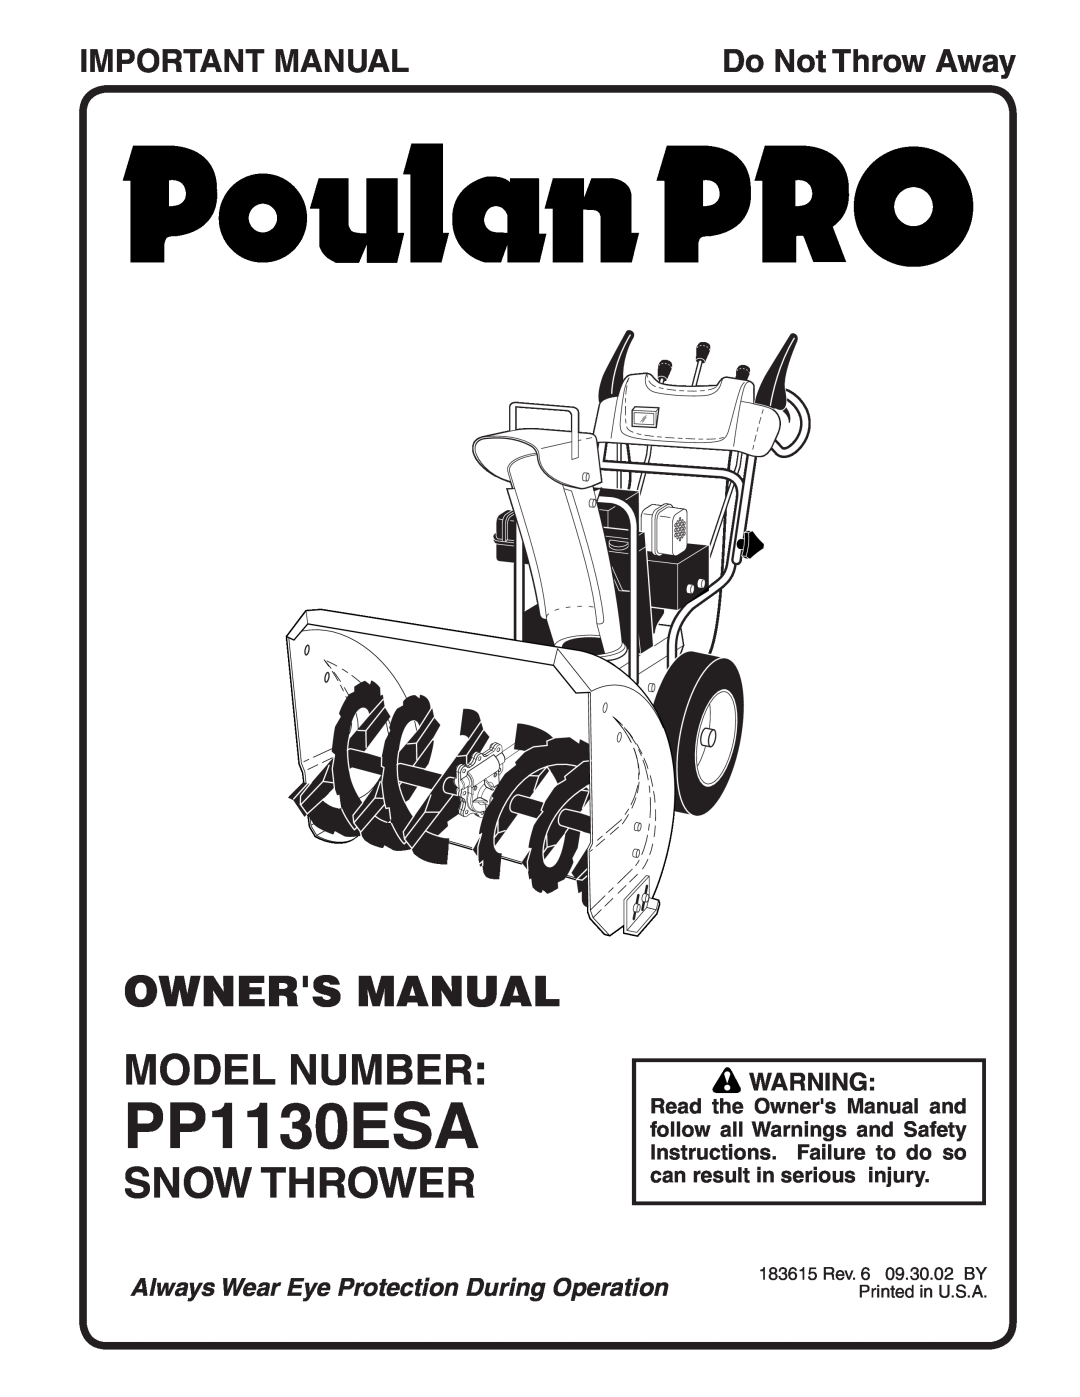 Poulan 183615 owner manual Snow Thrower, Important Manual, PP1130ESA, Do Not Throw Away 